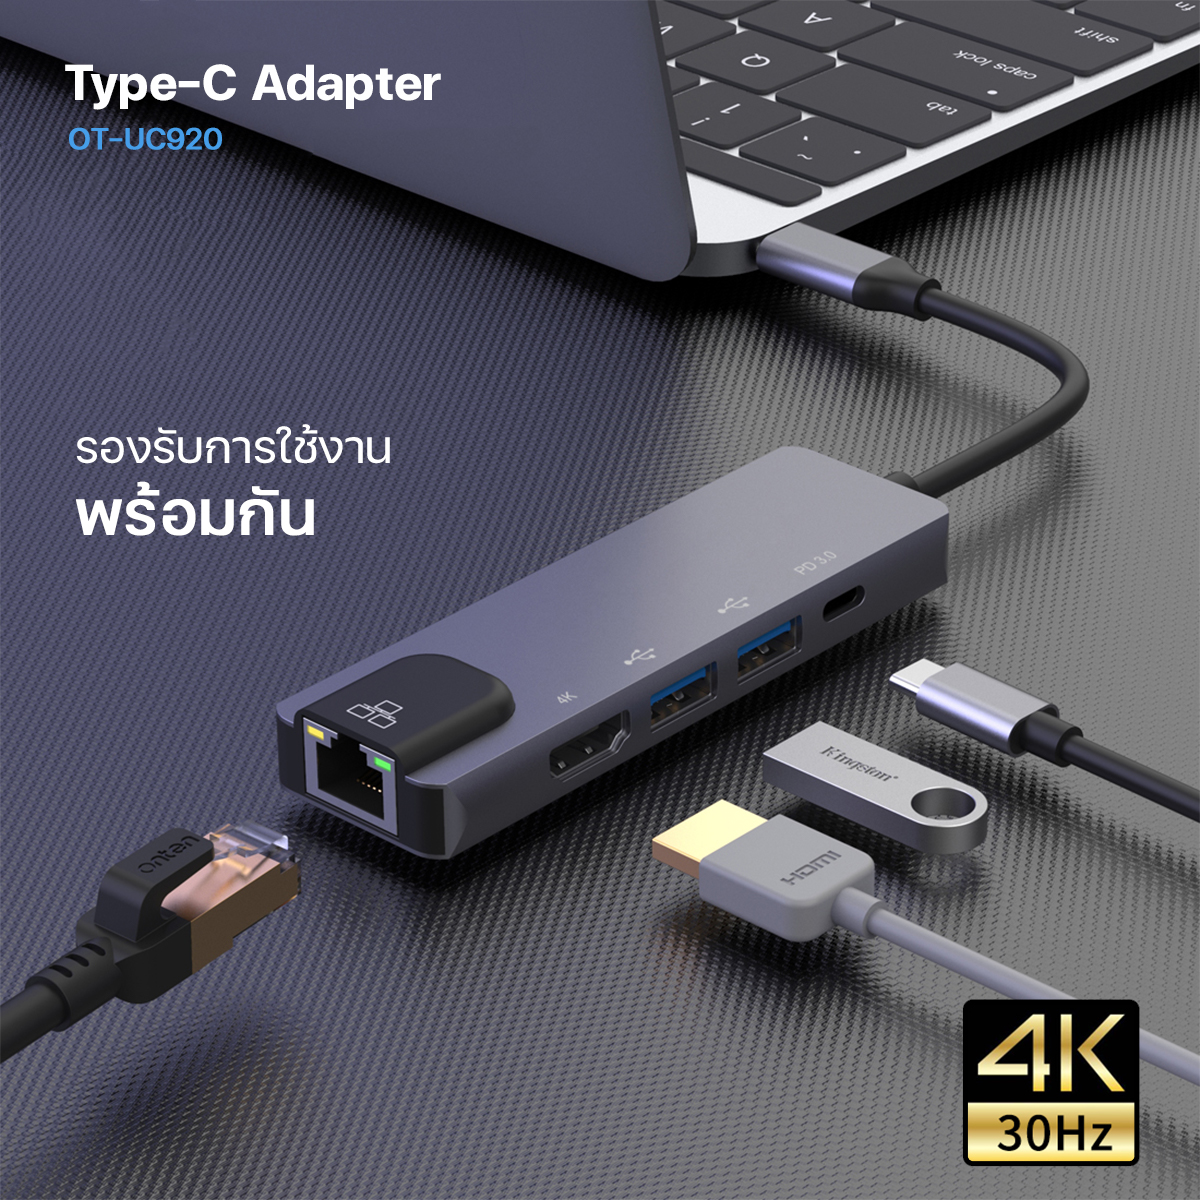 Lan Adapter 100 Mbps USB 3.0 TypeC Network Adapter Hub อุปกรณ์เสริมสำหรับต่อสายแลนคอมพิวเตอร์ โน๊ตบุ๊ค PC ทั่วไป โทรศัพท์มือถือ Huawei mate10/20/P20/P30 Samsung S8Note 9 Nintendos#T-001